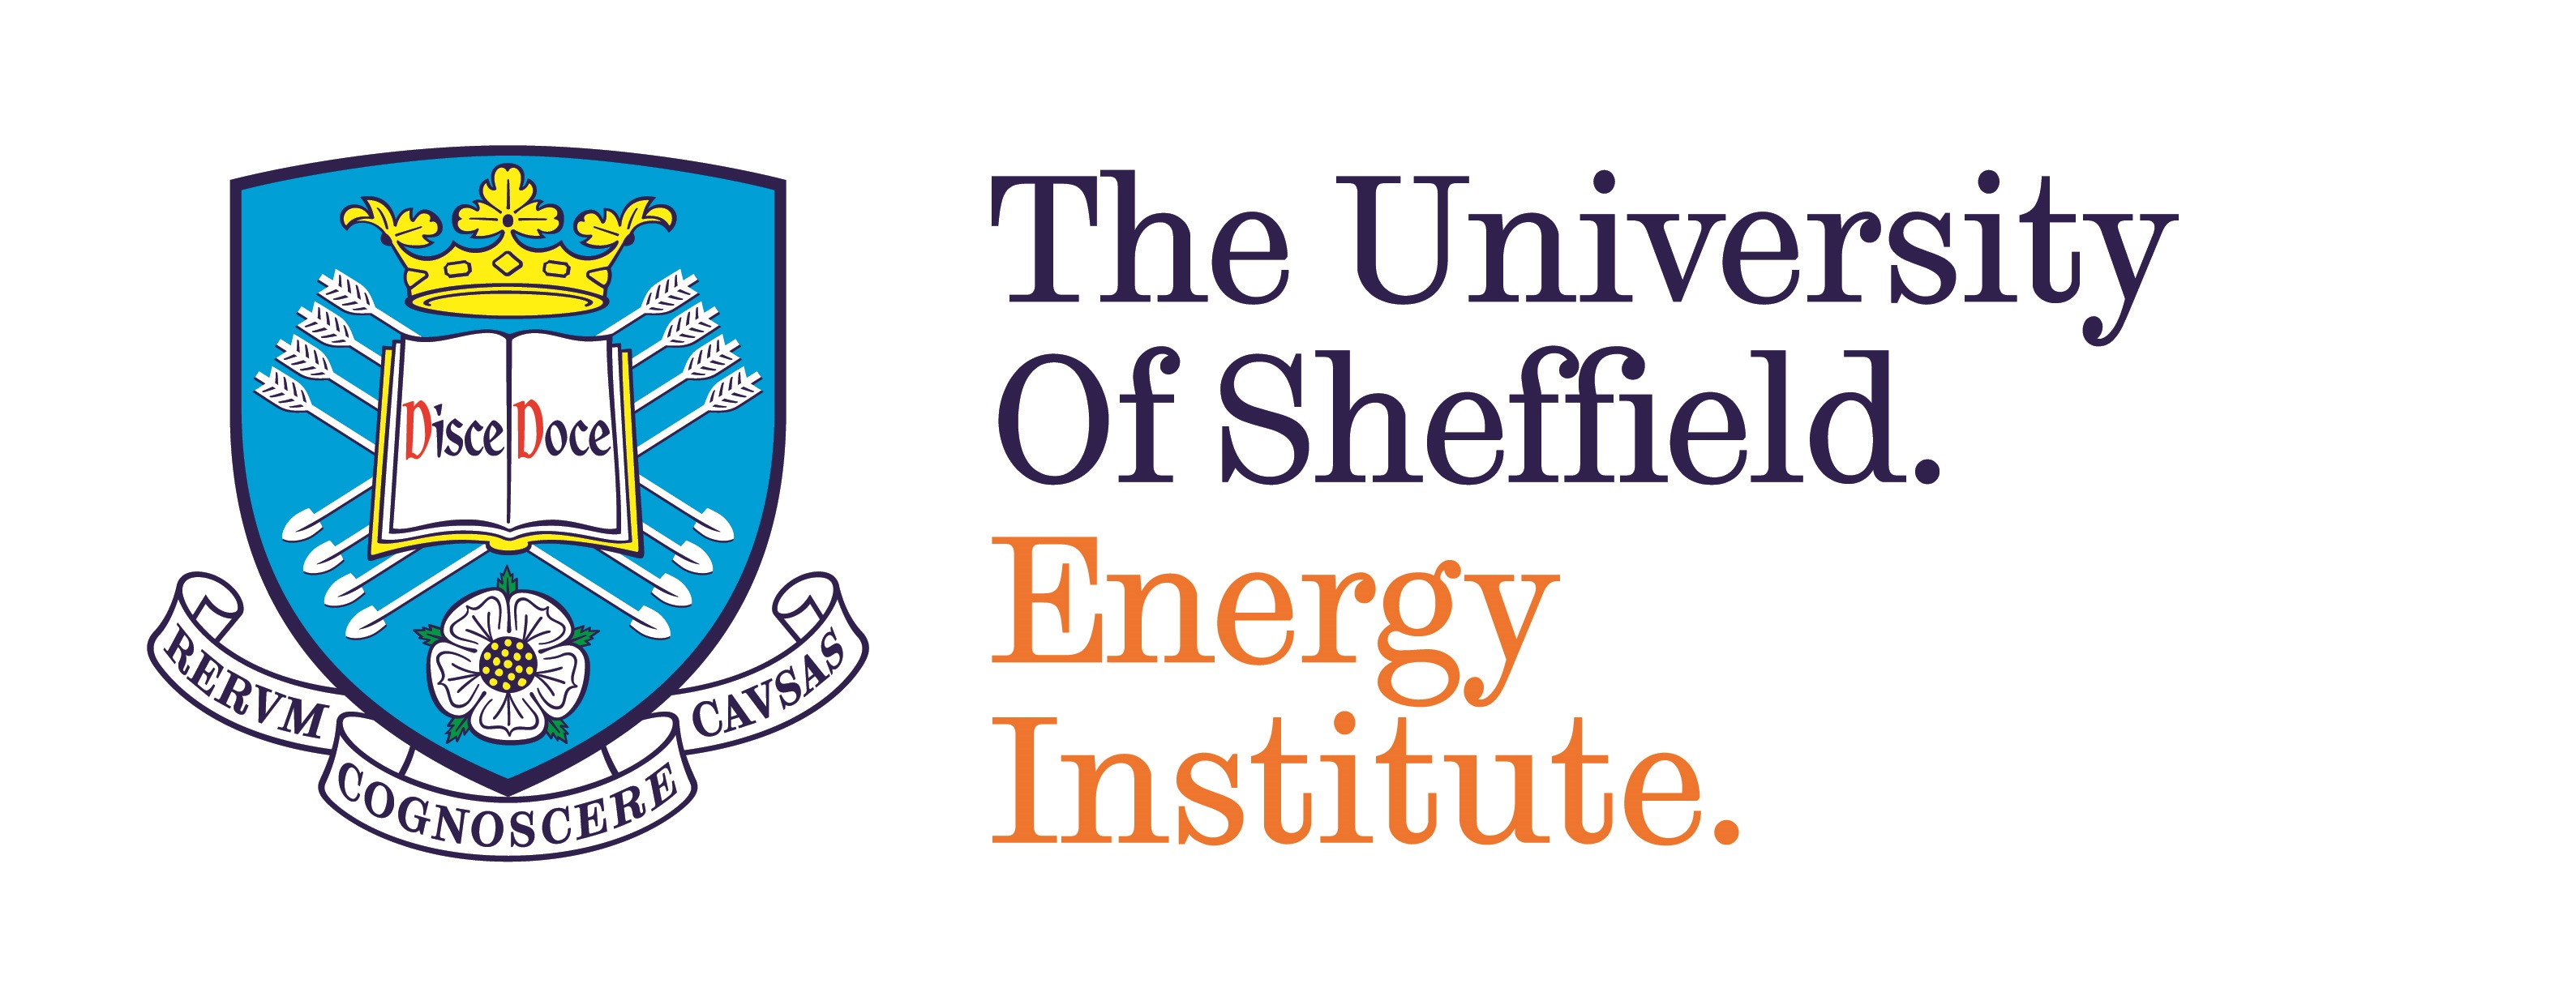 The University of Sheffield, Energy Institute